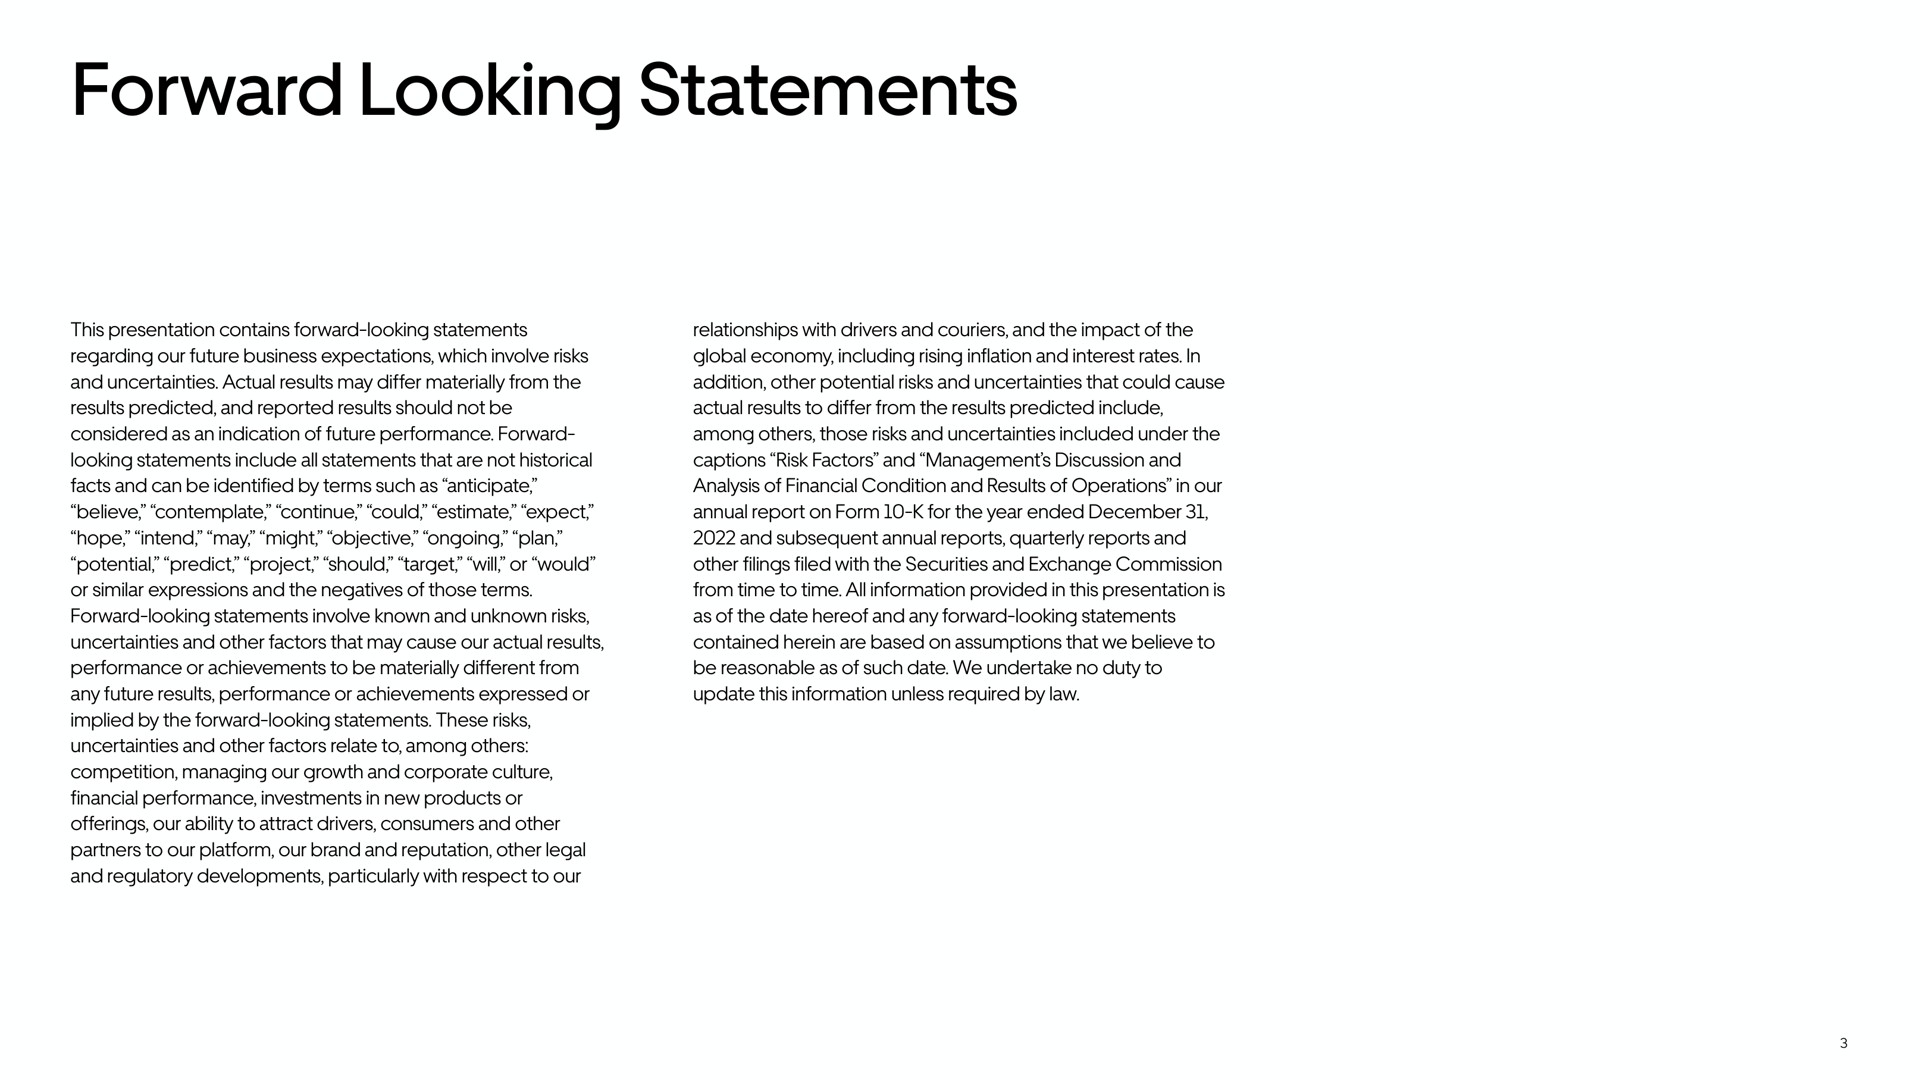 forward looking statements | Uber